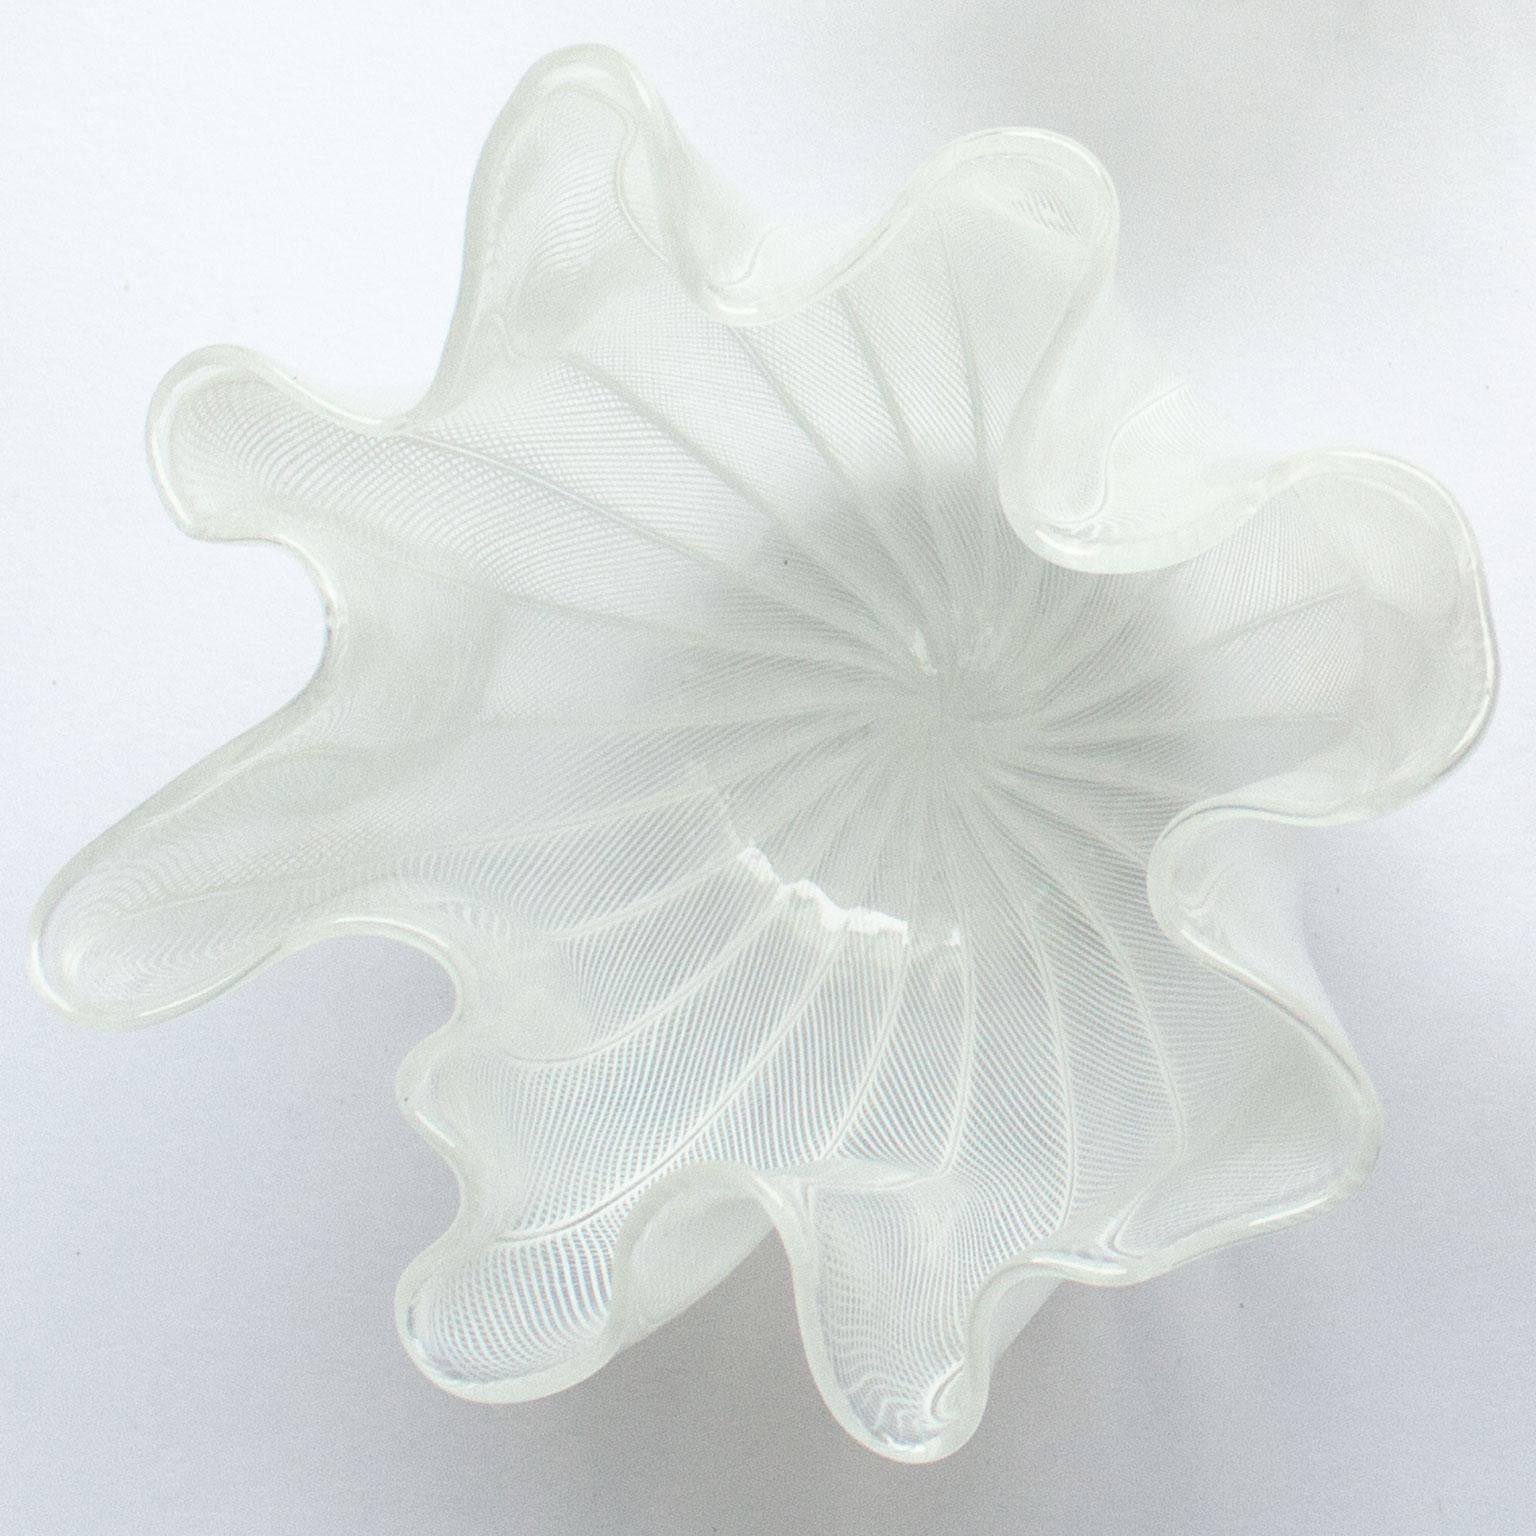 Art Glass 3 Murano Handkerchief Vases Bowls from Murano, Venini, Italy For Sale